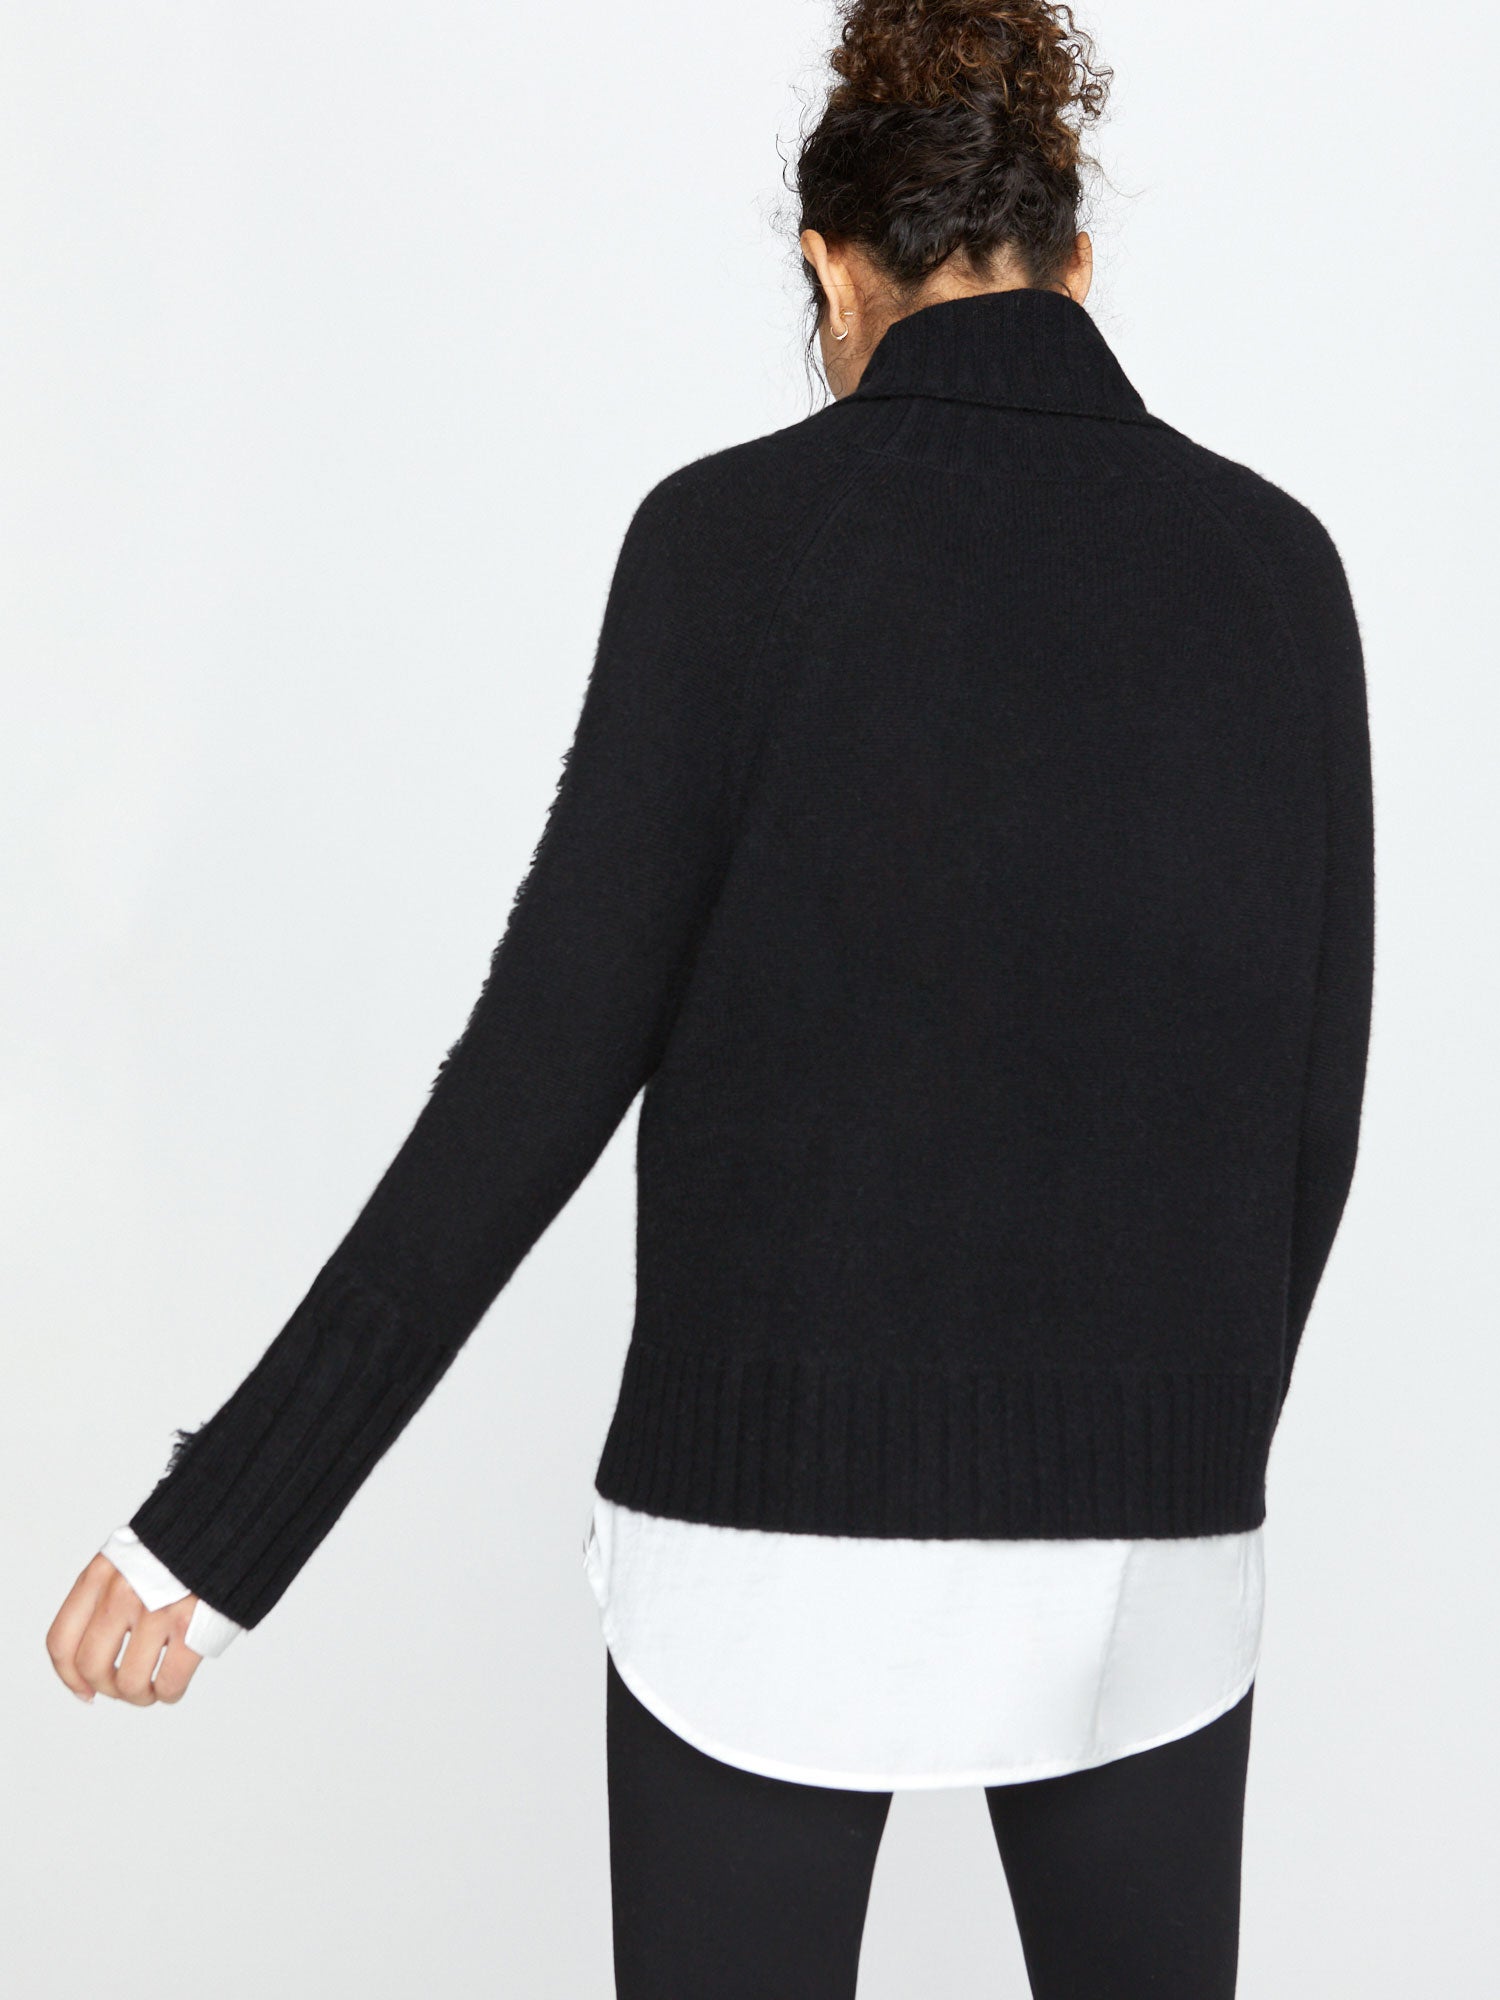 Jolie black layered turtleneck sweater back view